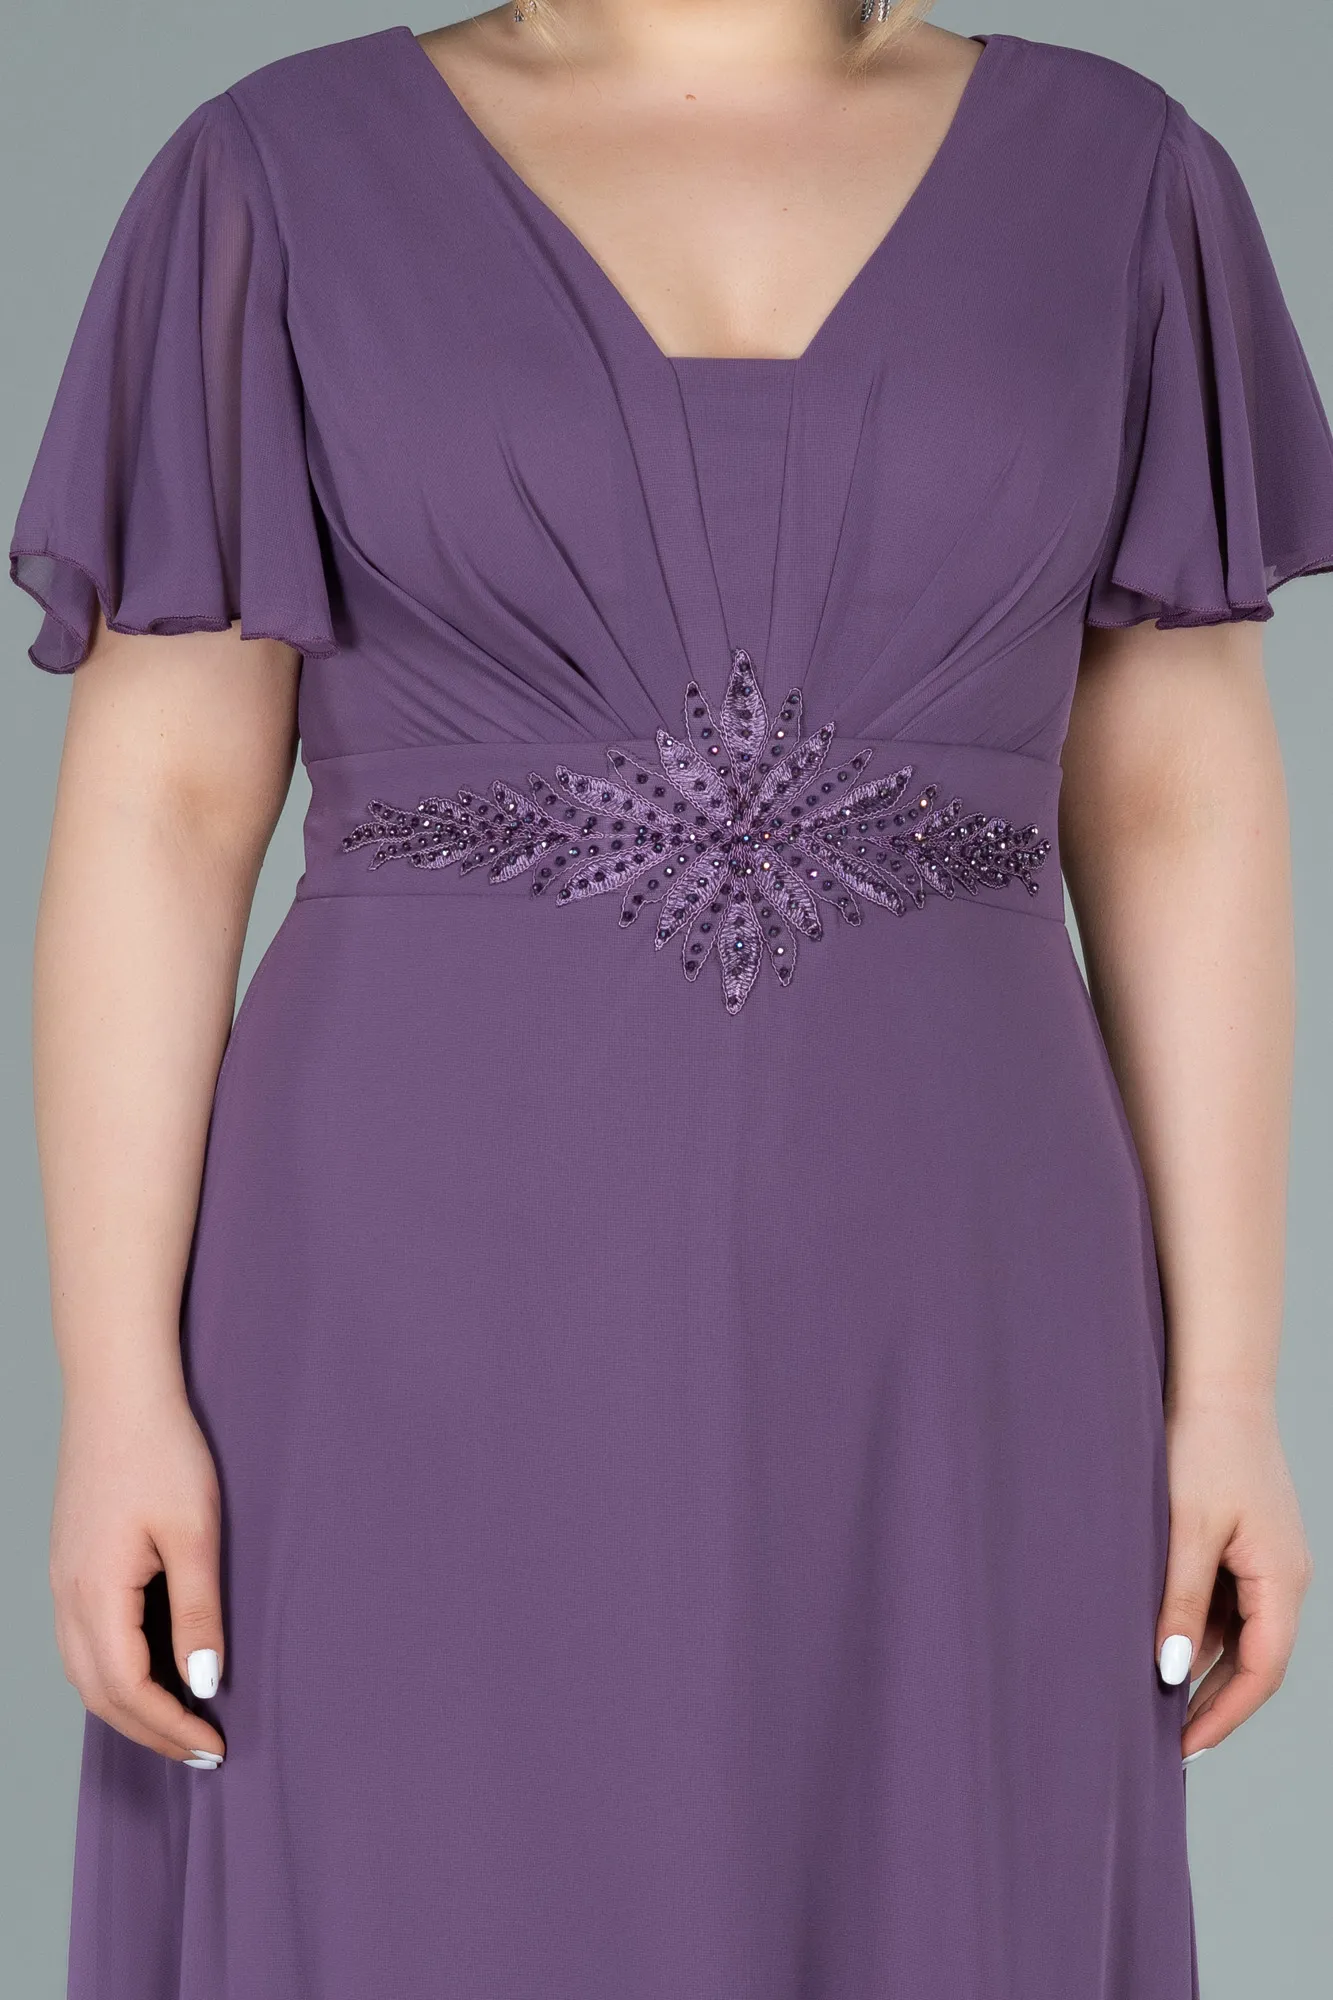 Lavender-Long Chiffon Plus Size Evening Dress ABU2308